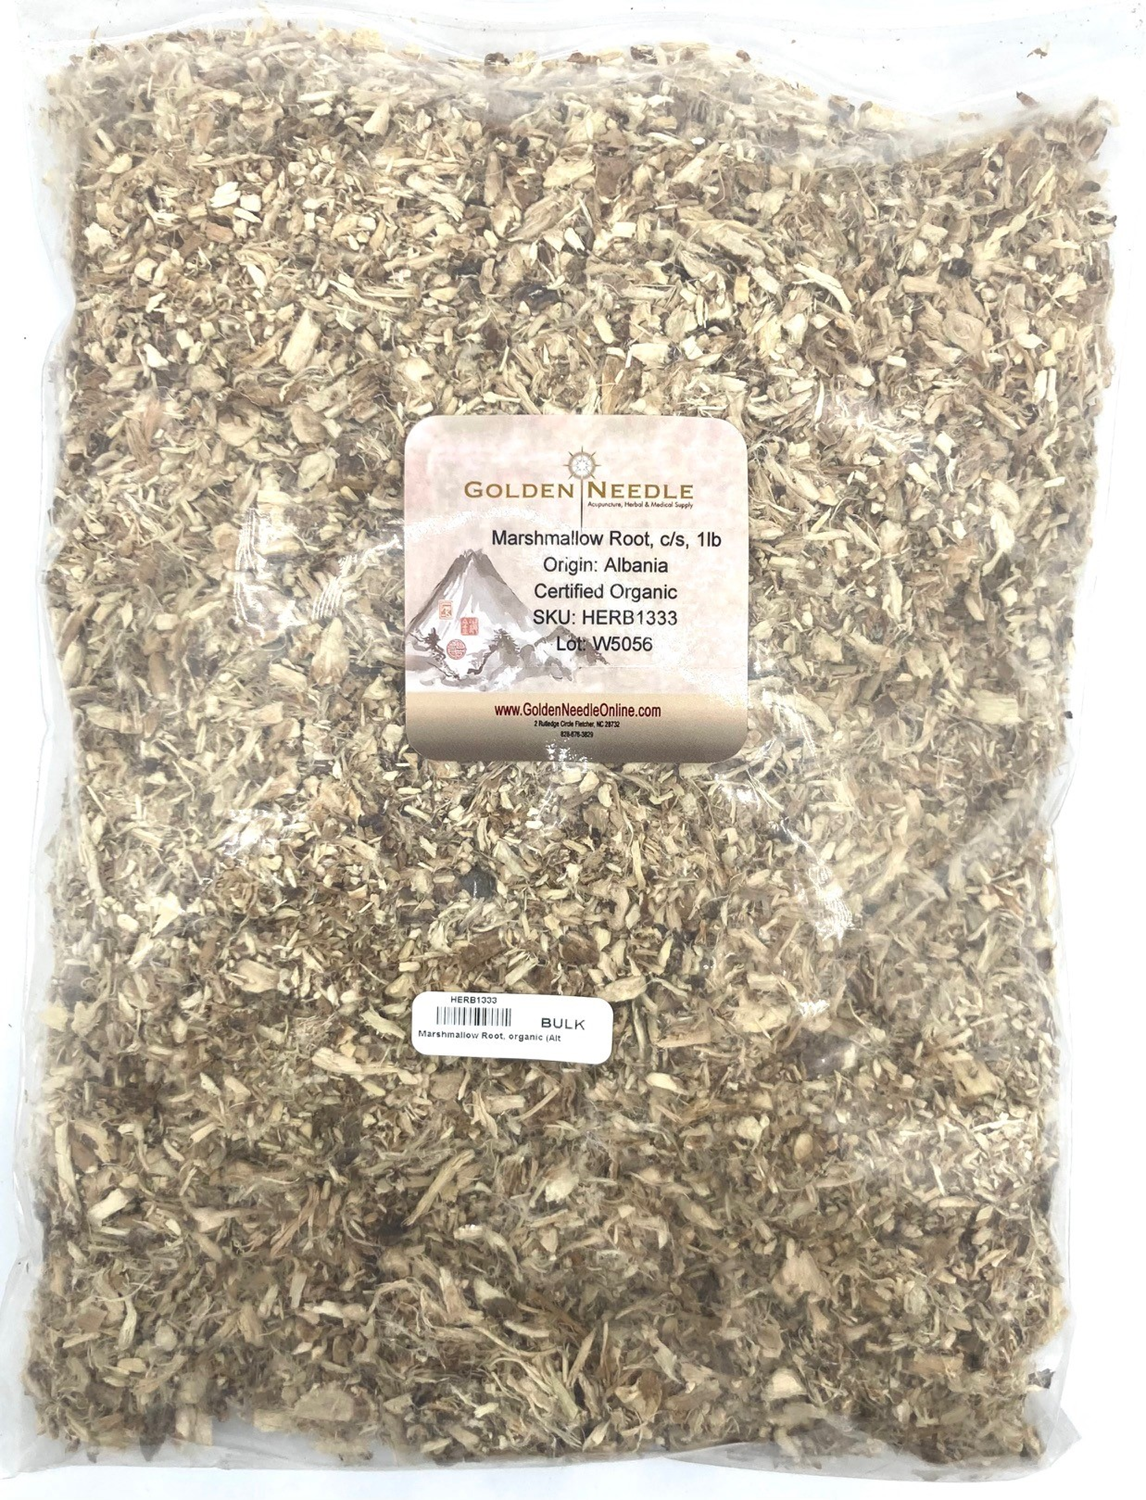 Marshmallow Root - Certified Organic, 1lb